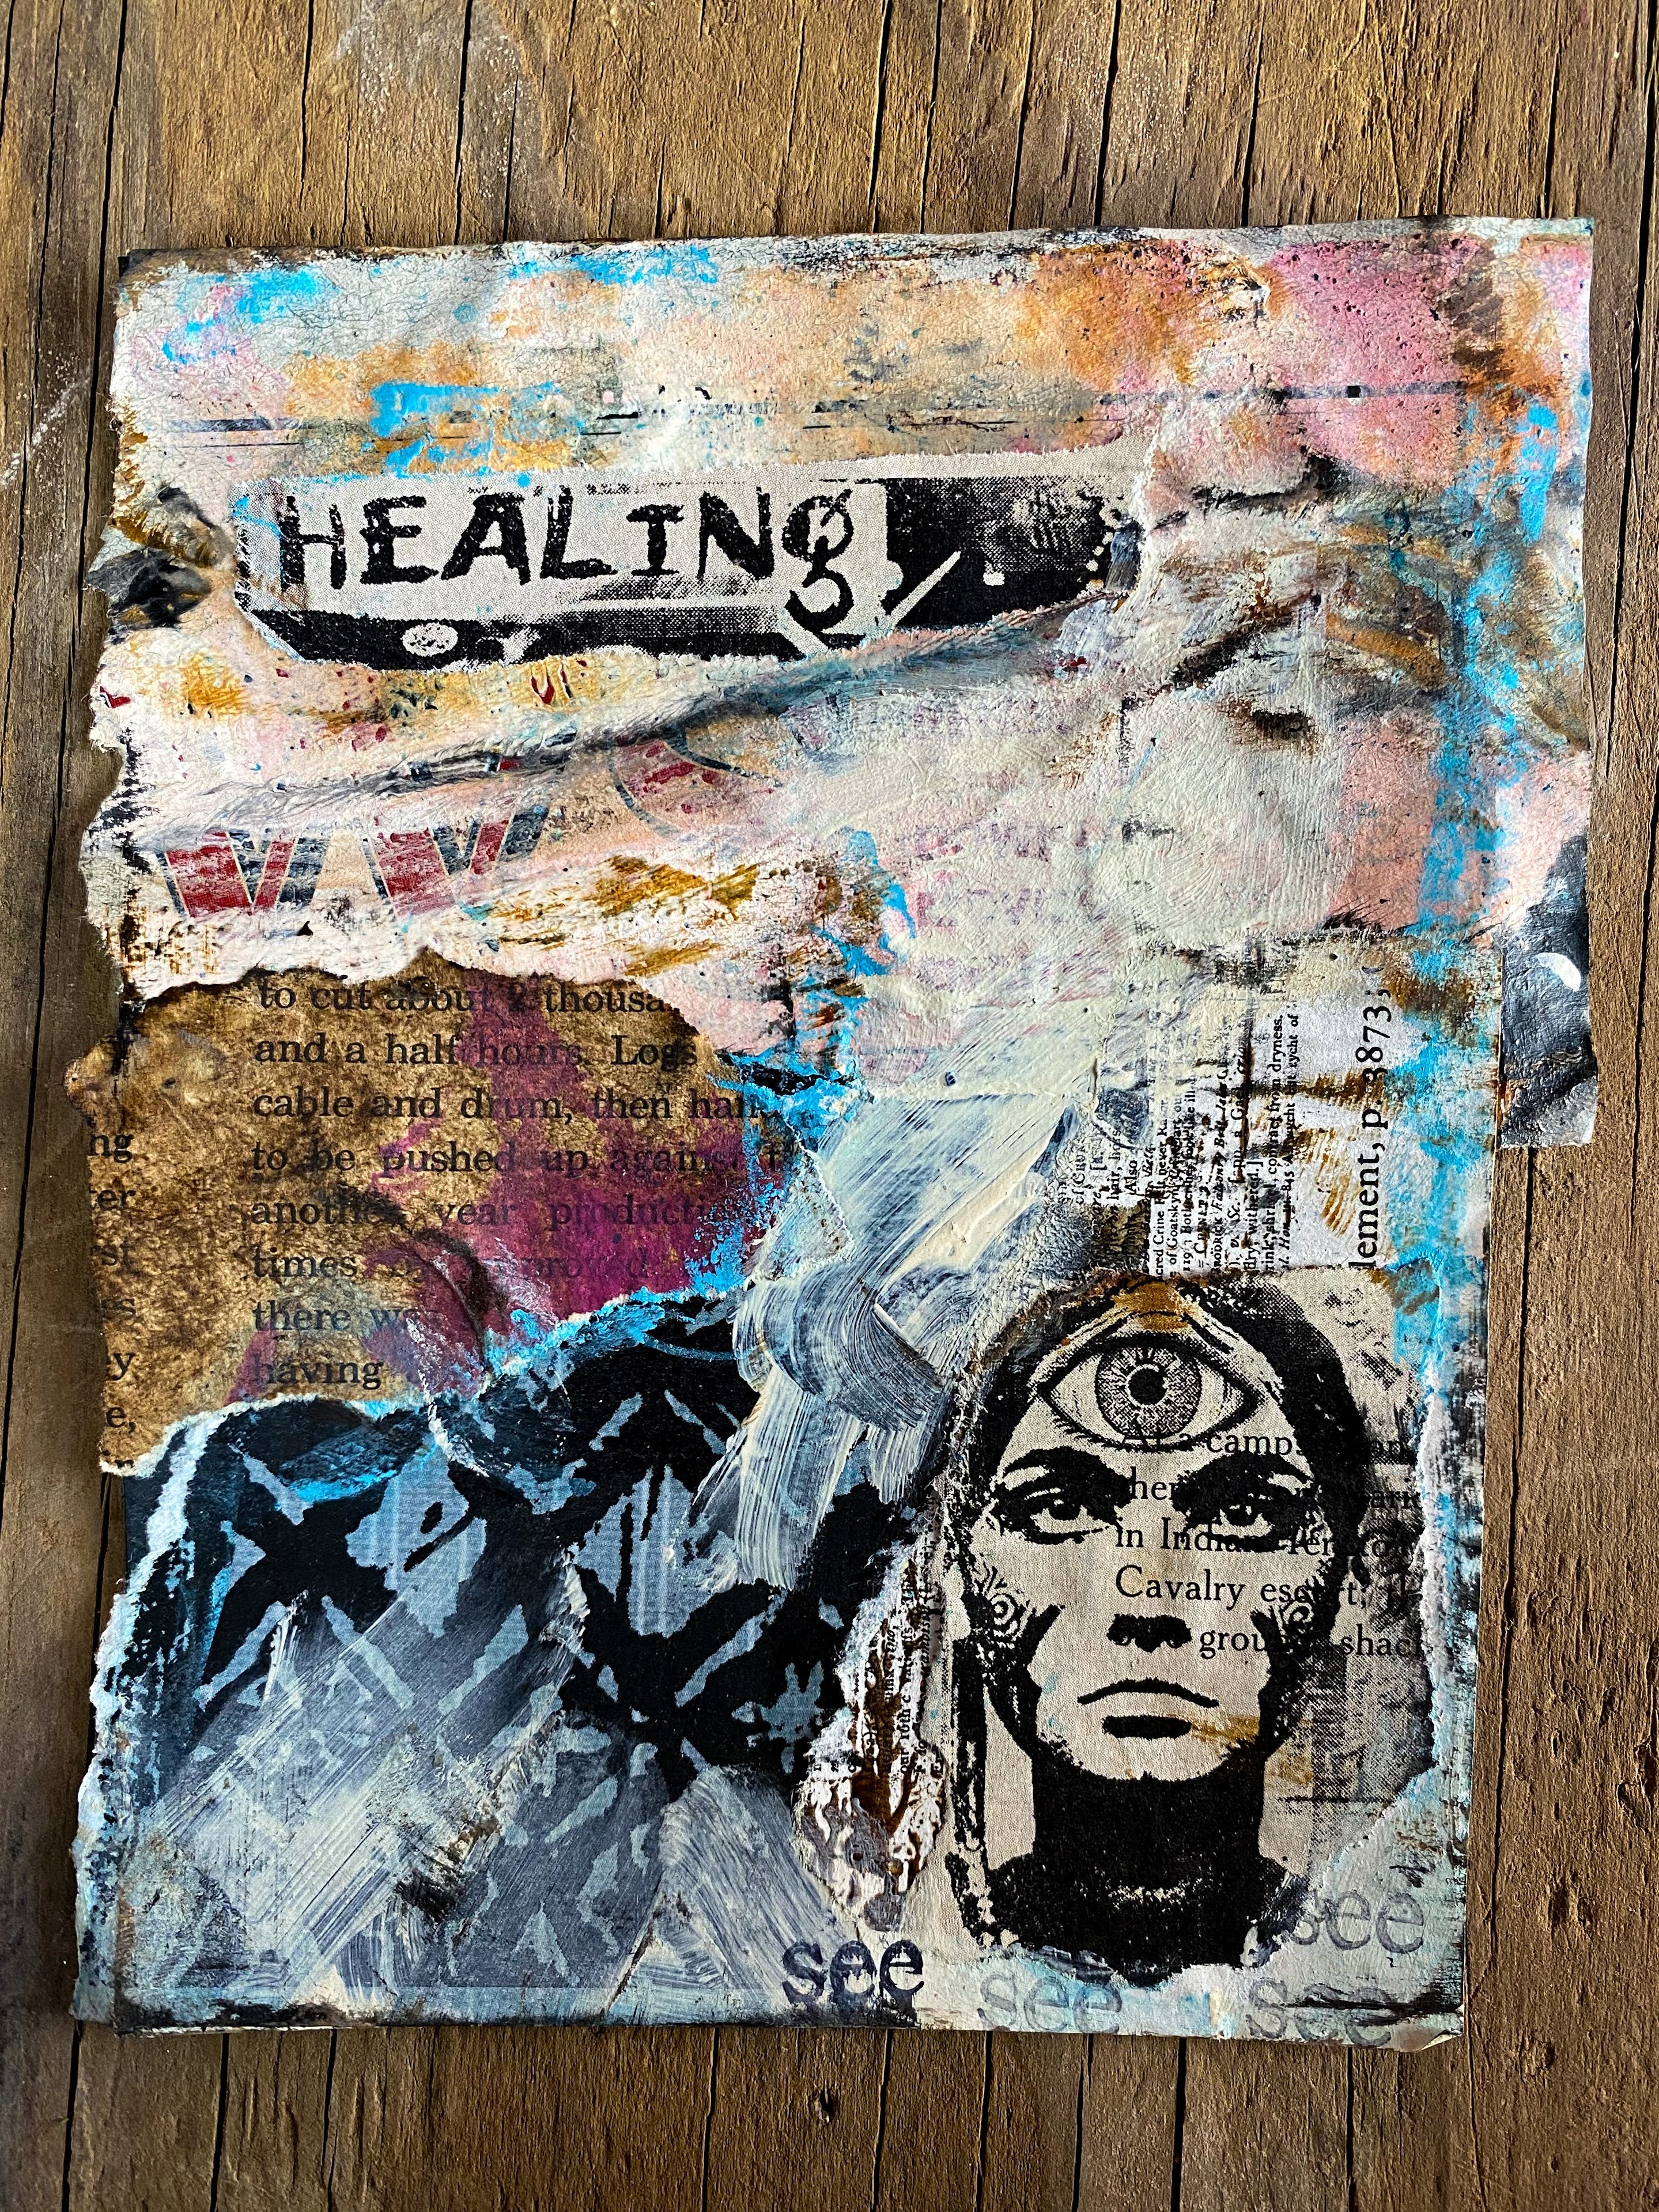 Healing - Original Mixed Media Collage